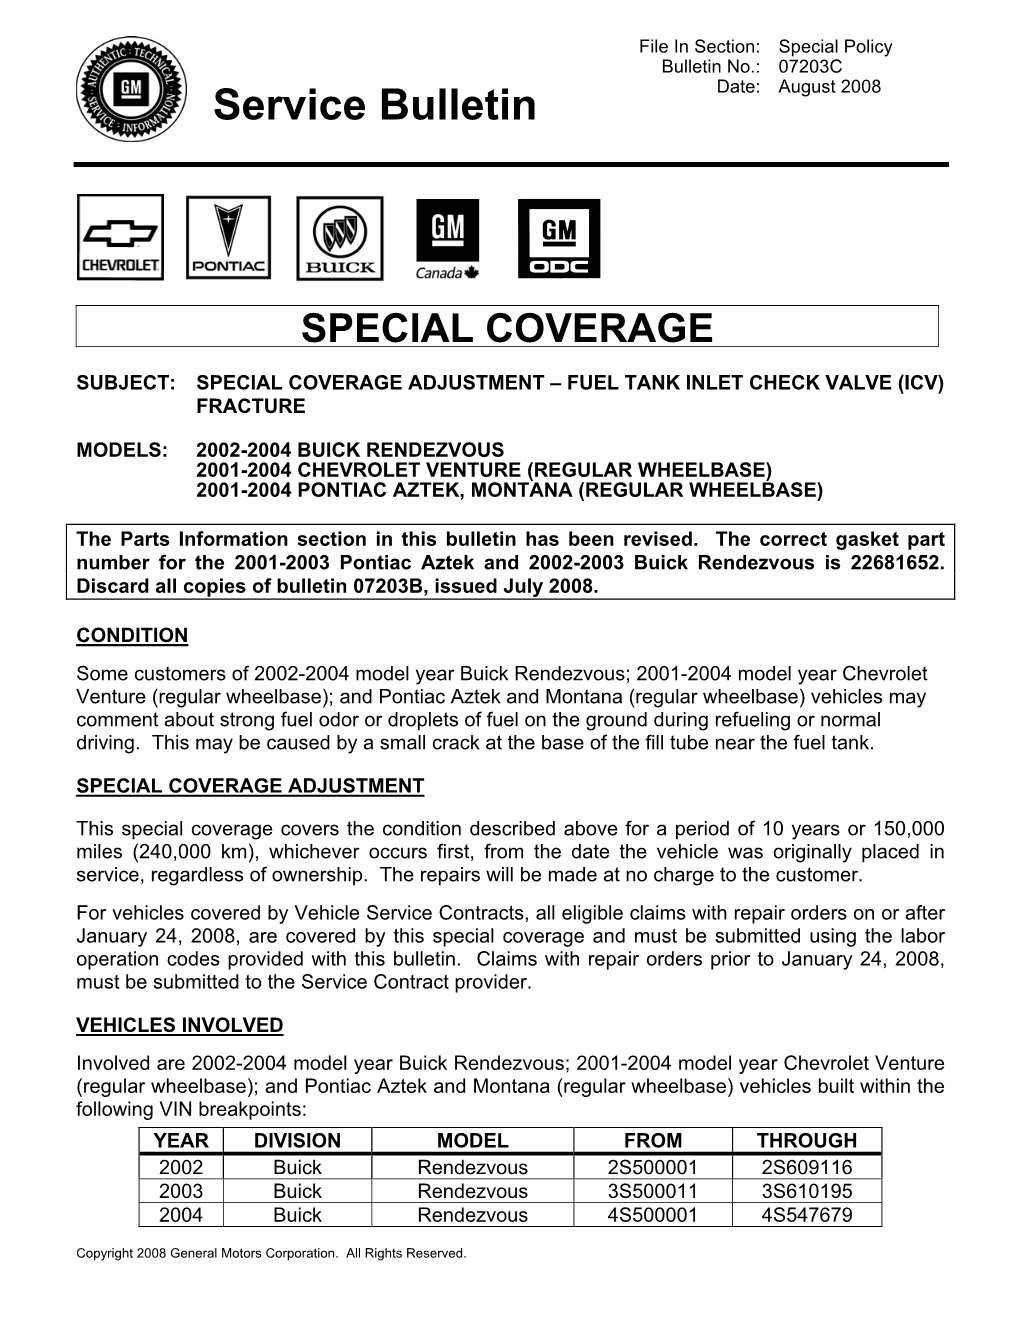 Service Bulletin Date: August 2008